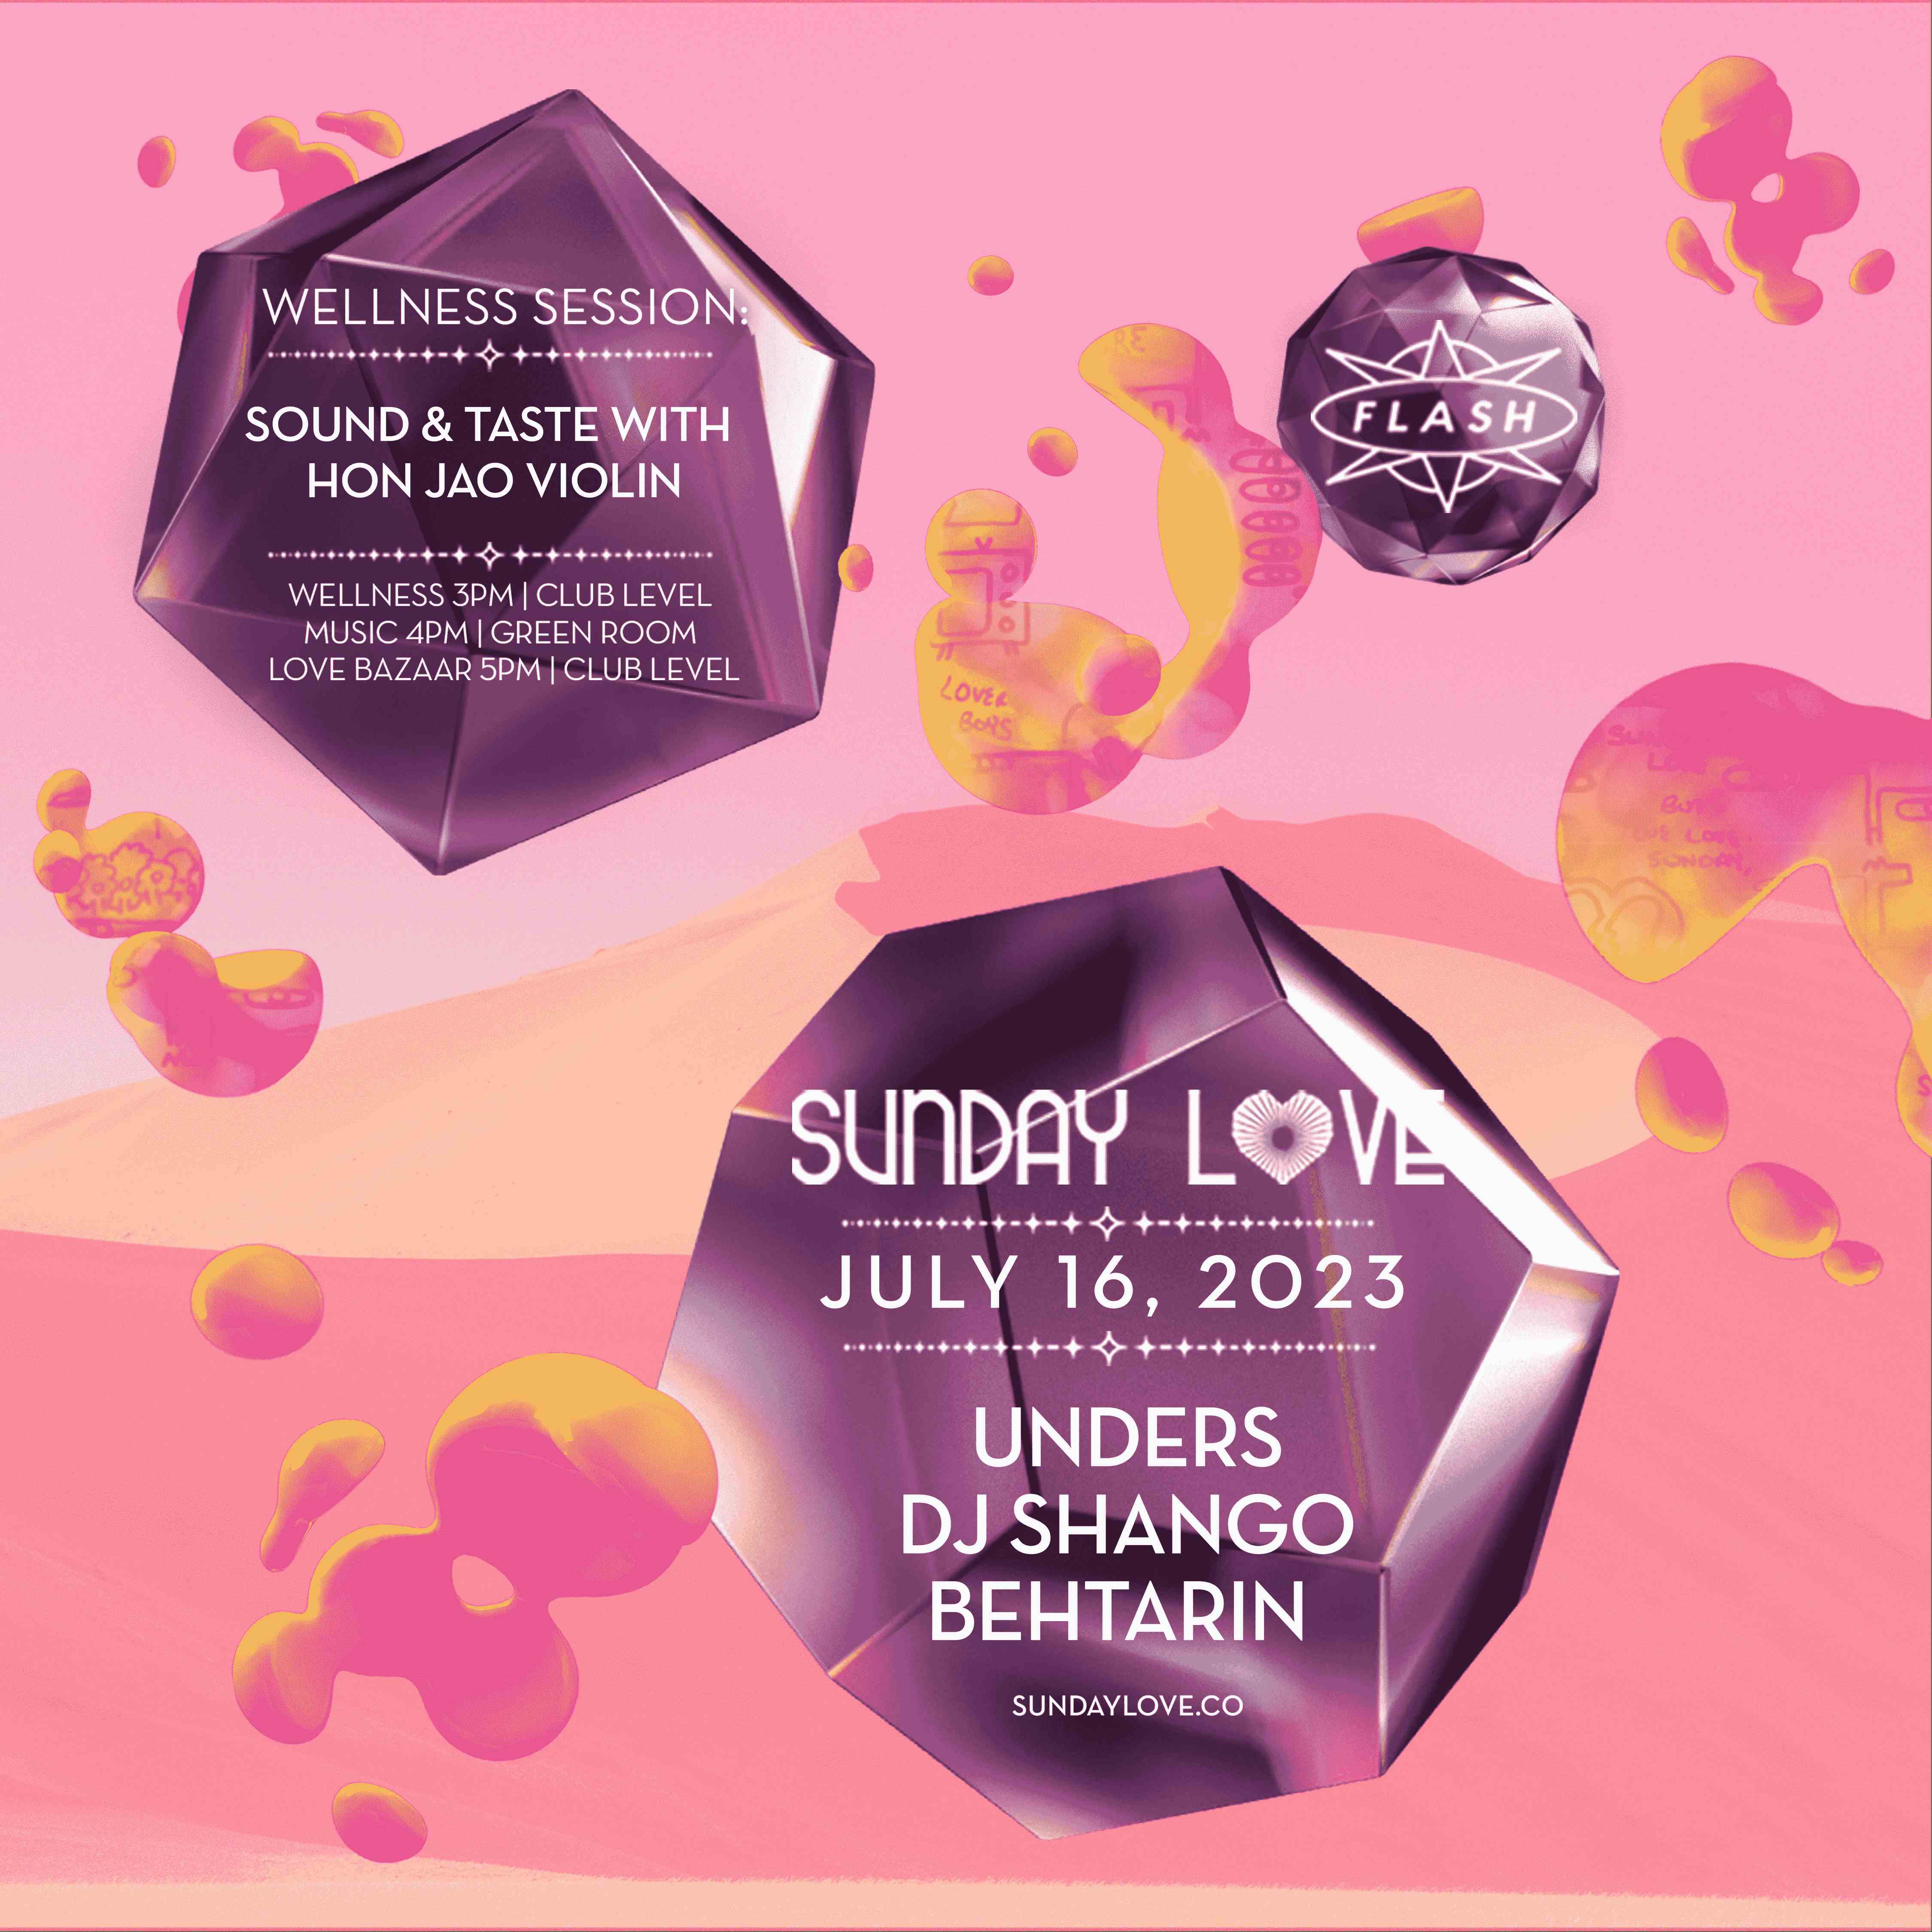 Sunday Love: Unders - DJ Shango - BehTarin event flyer